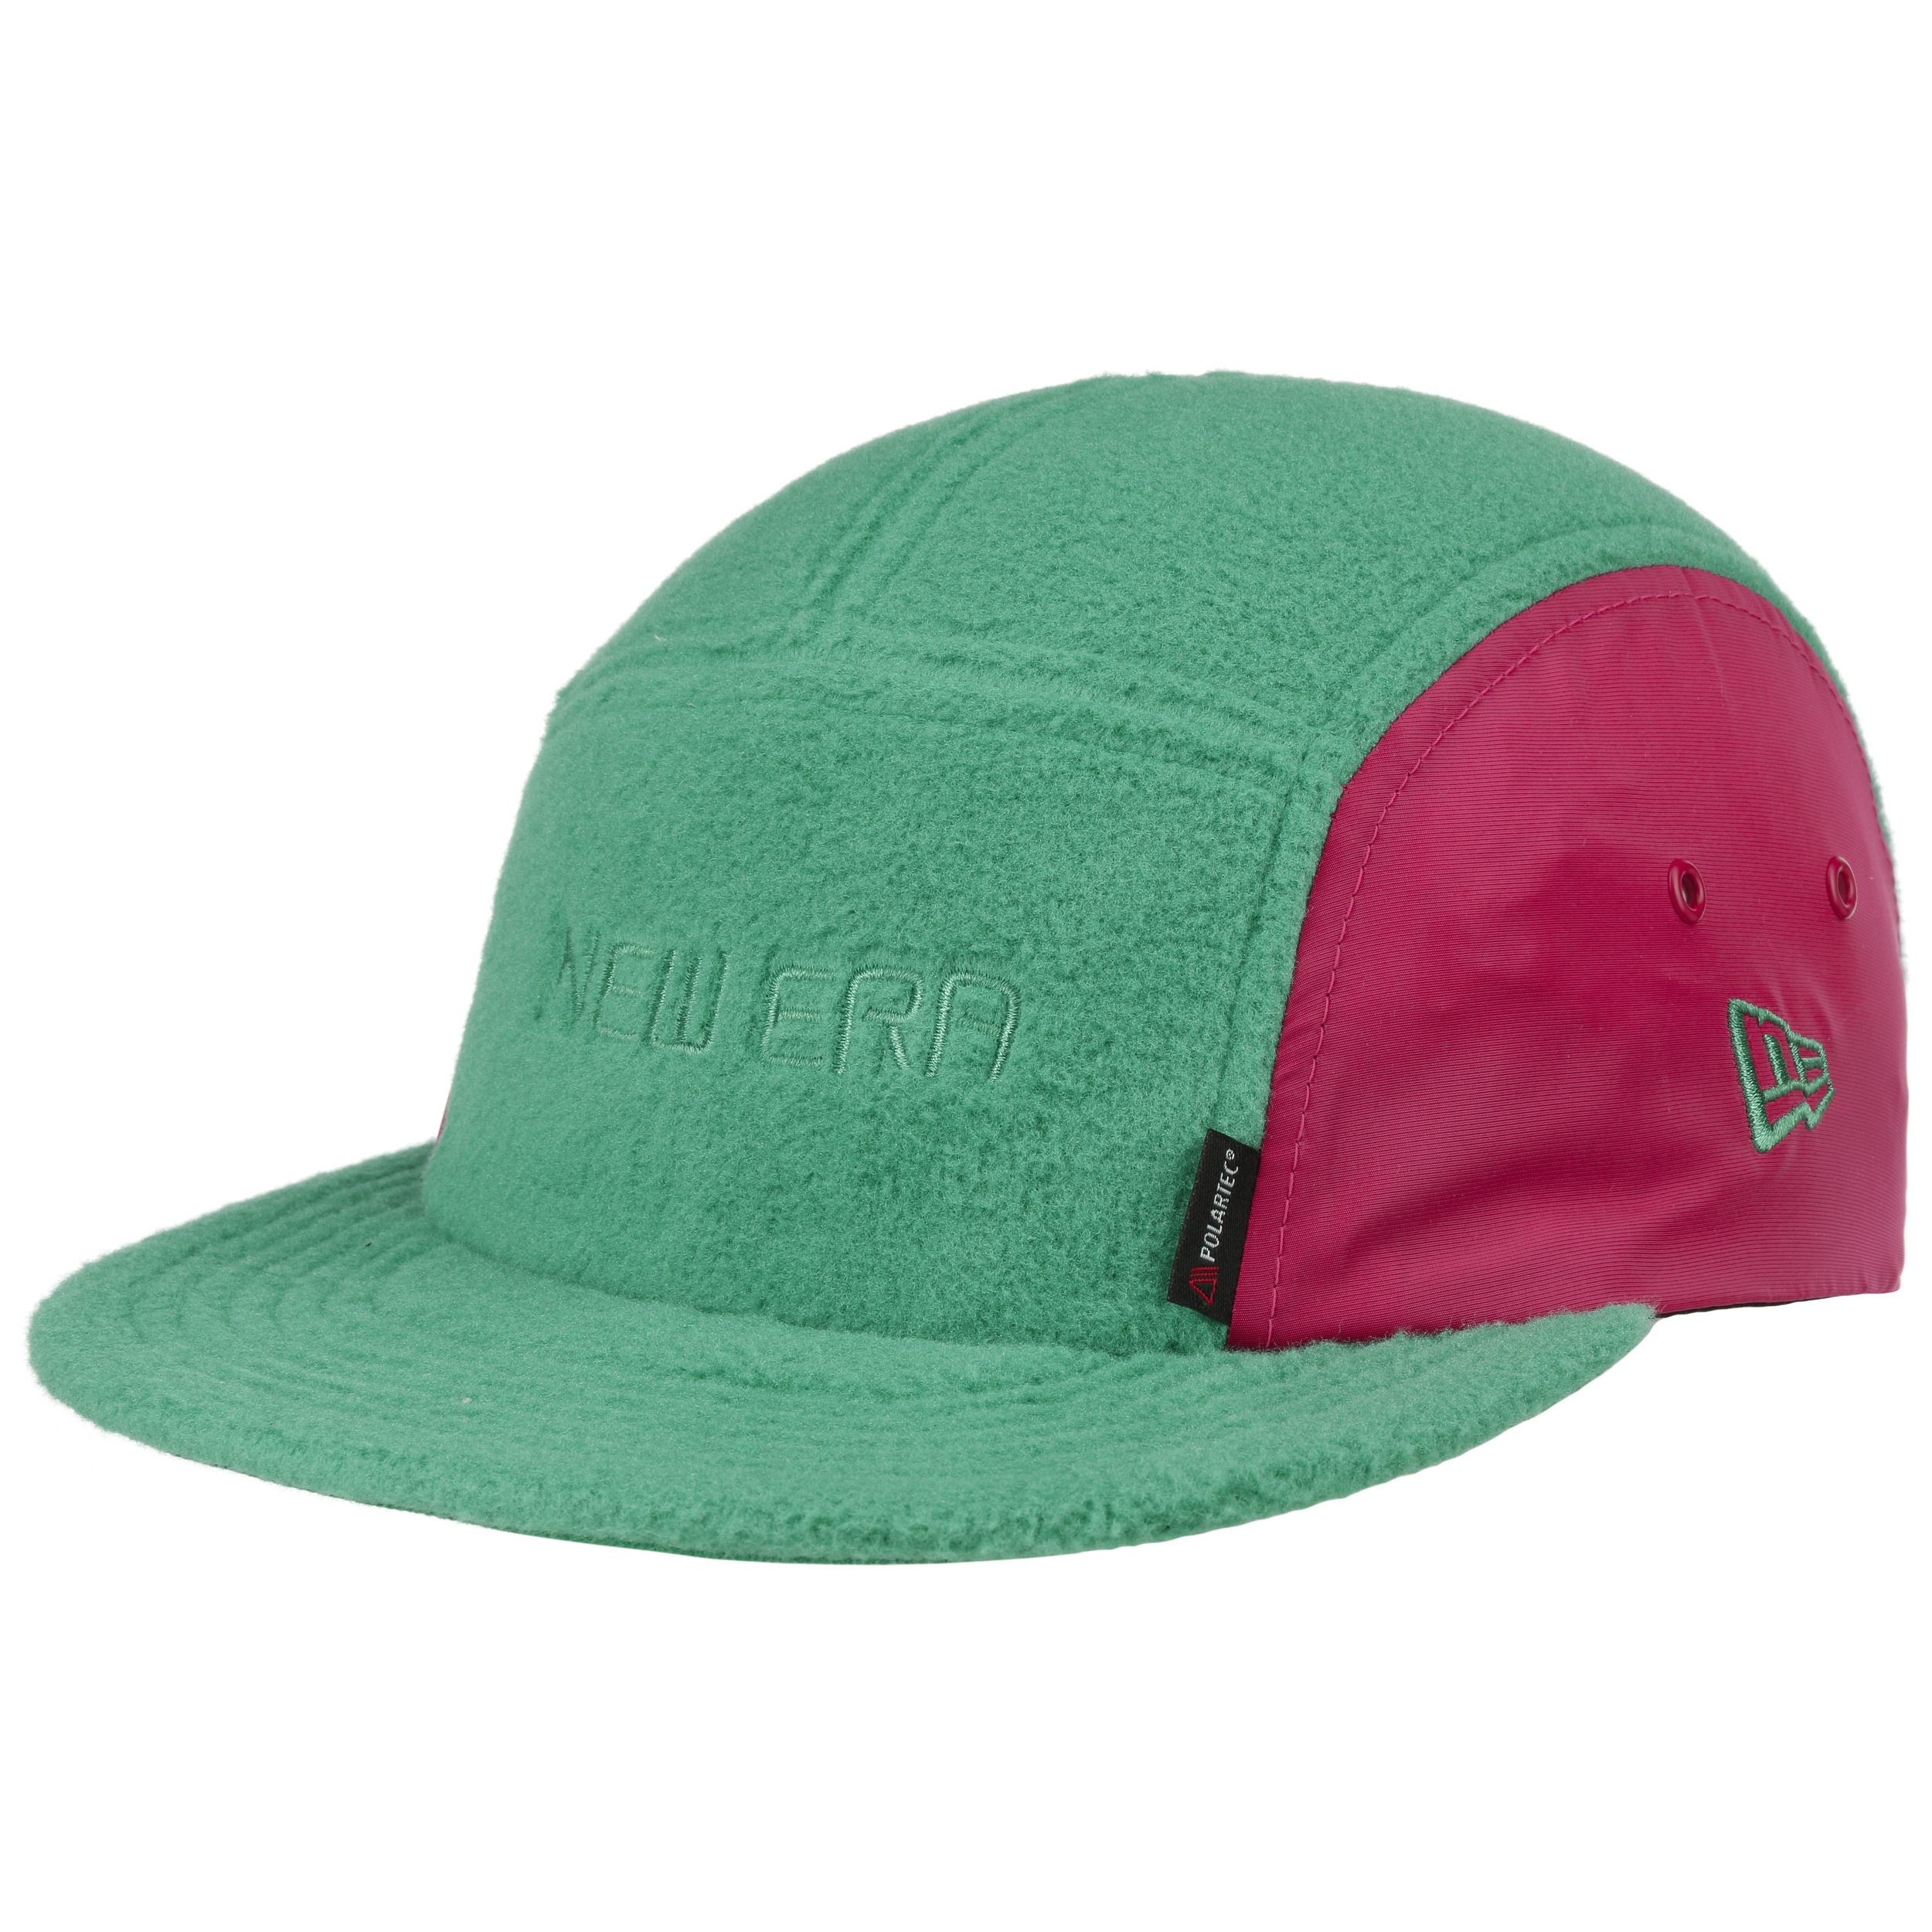 & Era by Hatshopping New Polartec Camper online Shop Hats, Caps Beanies --> ▷ Cap